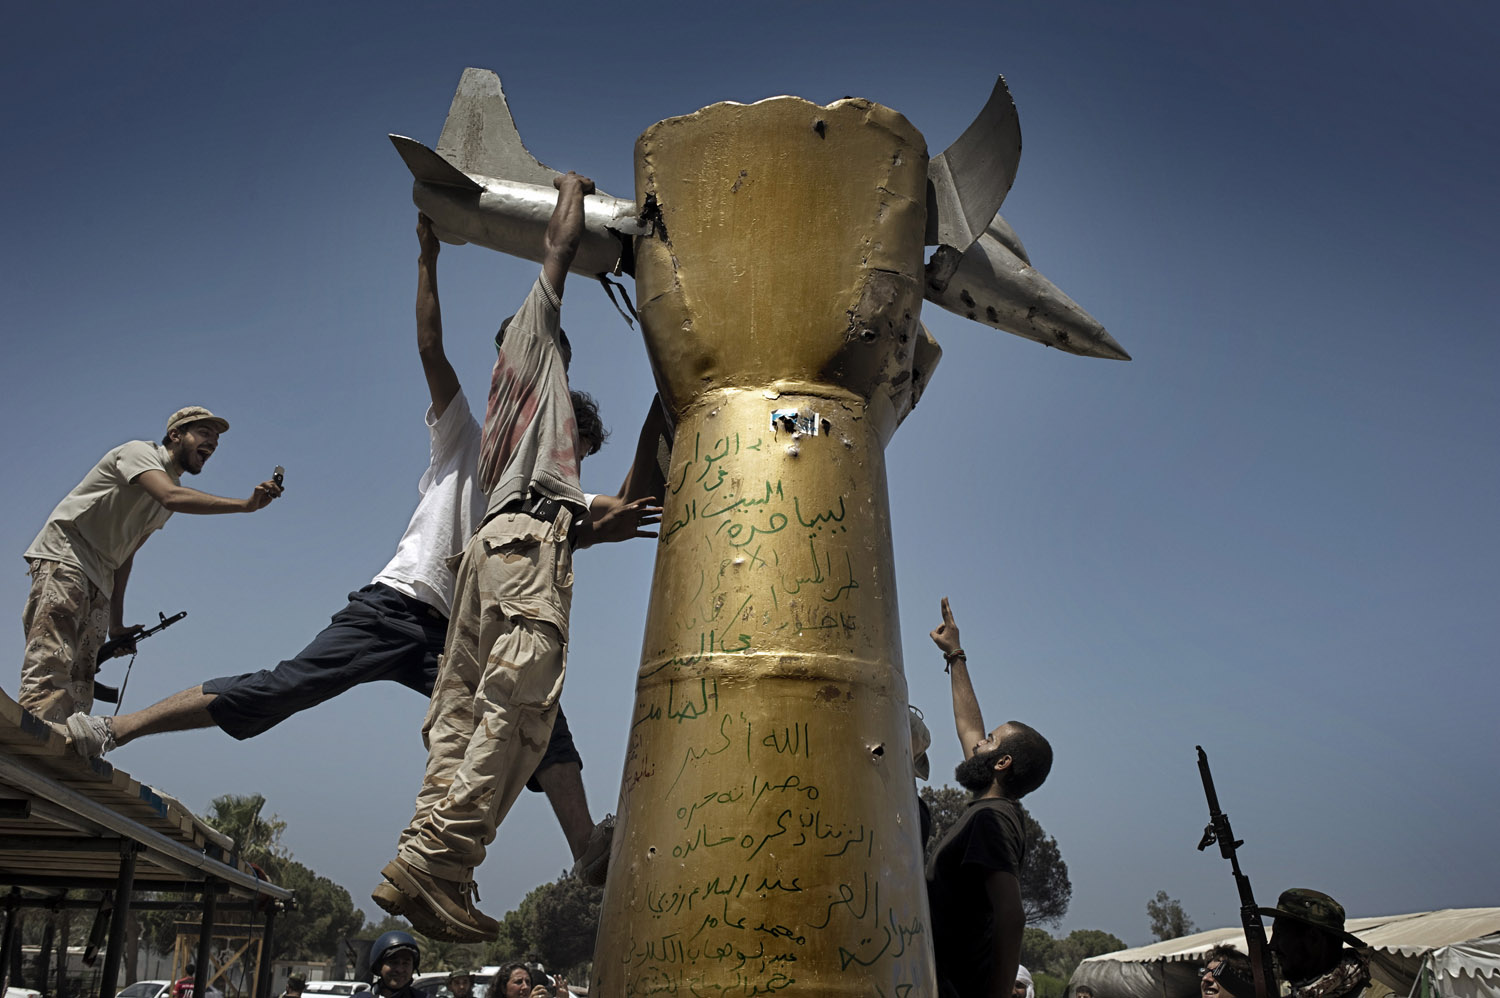 Rebels scale a statue in celebration within Gaddafi's Bab al-Aziziya compound in Tripoli, Libya, August 24, 2011.